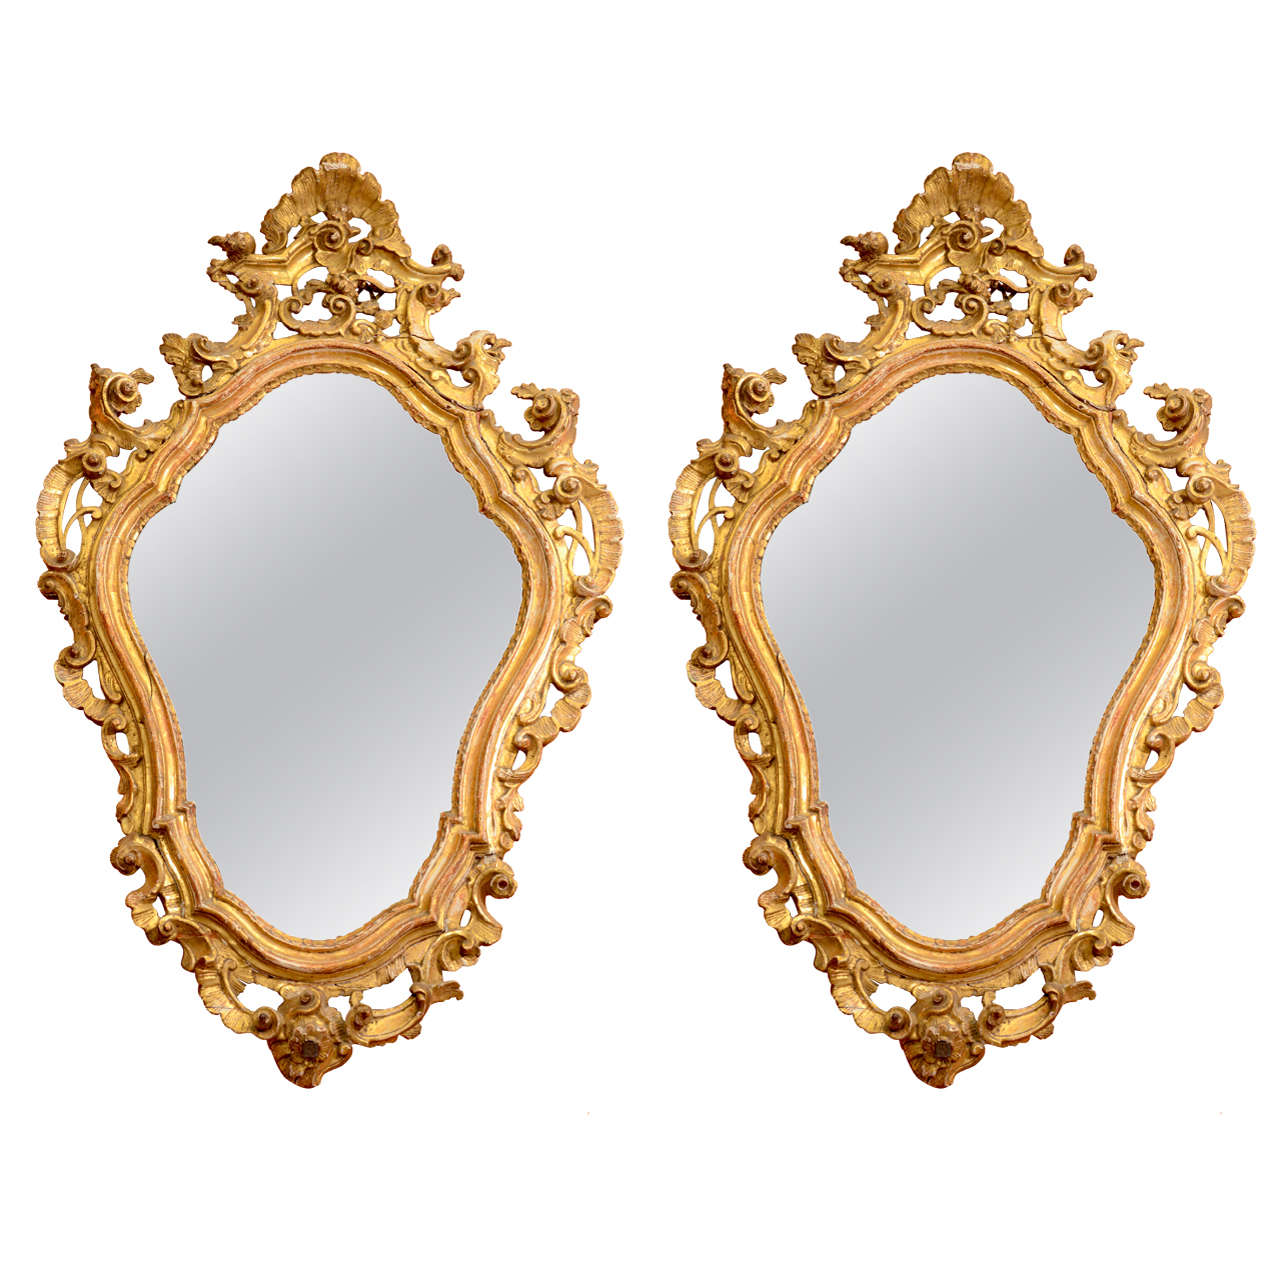 Pair of Italian Rococo Mirrors at 1stdibs